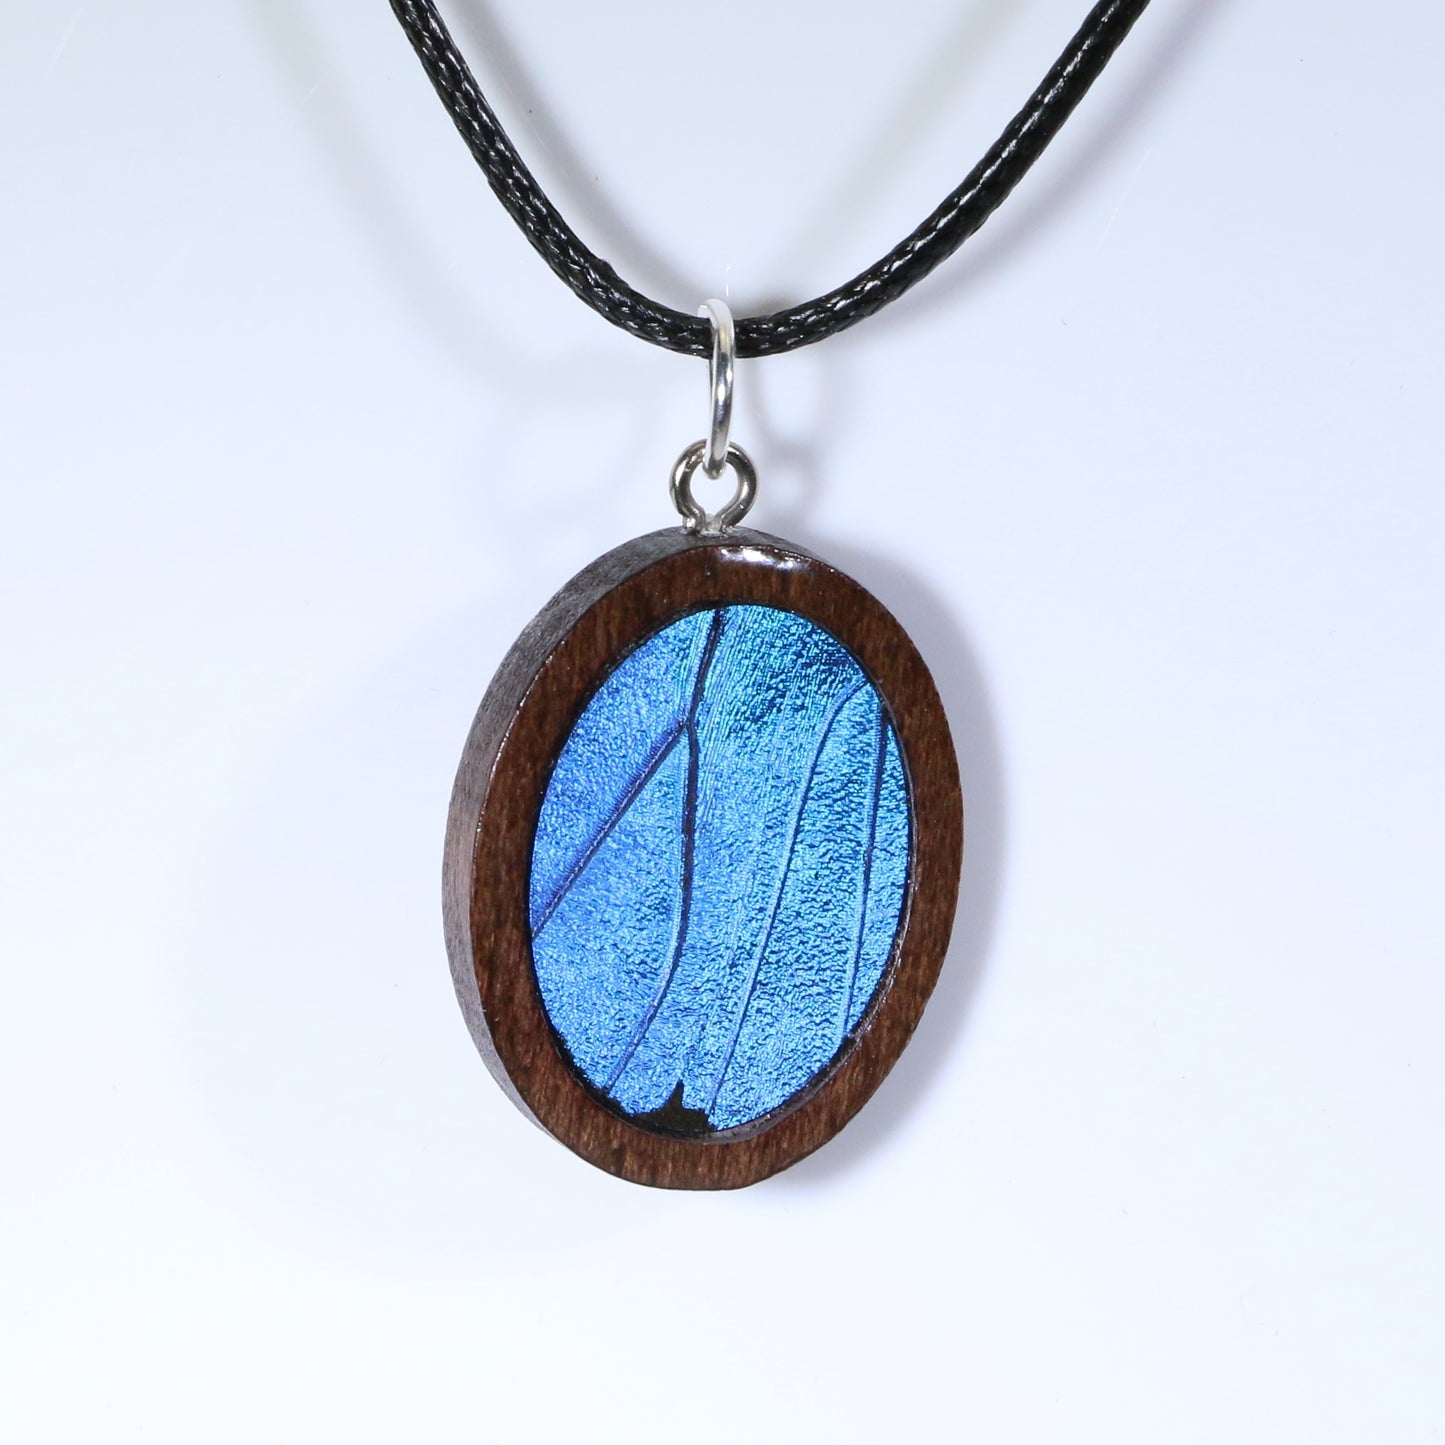 52611 - Real Butterfly Wing Jewelry - Pendant - Dark Wood - Oval - Plain - Blue Morpho